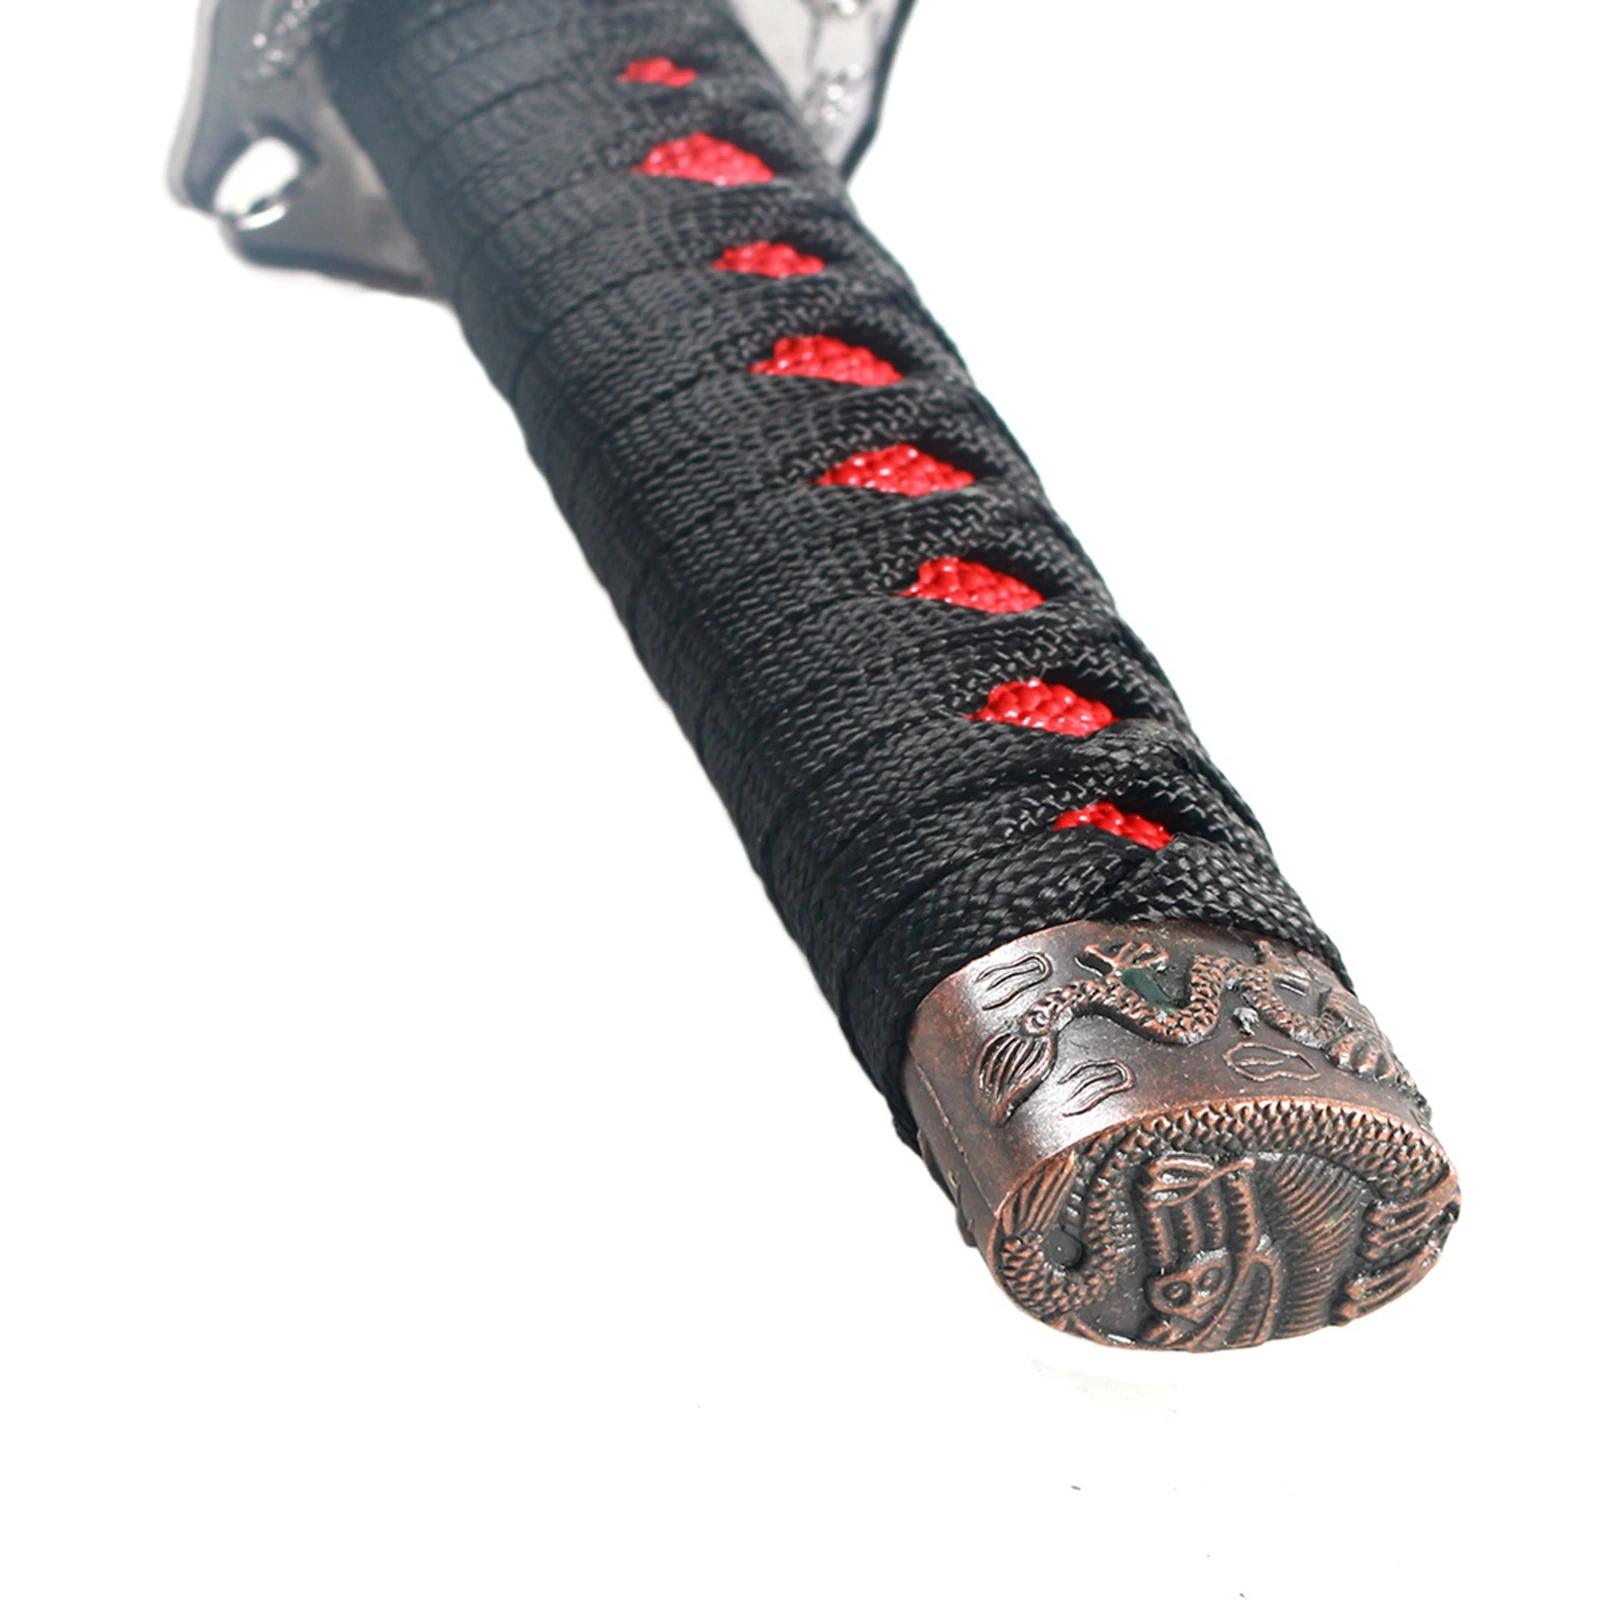 Samurai Schwert Schaltknauf Schalthebel Katana Metall schwarz & rot Schalt  getriebe Schalthebel Universal 15cm